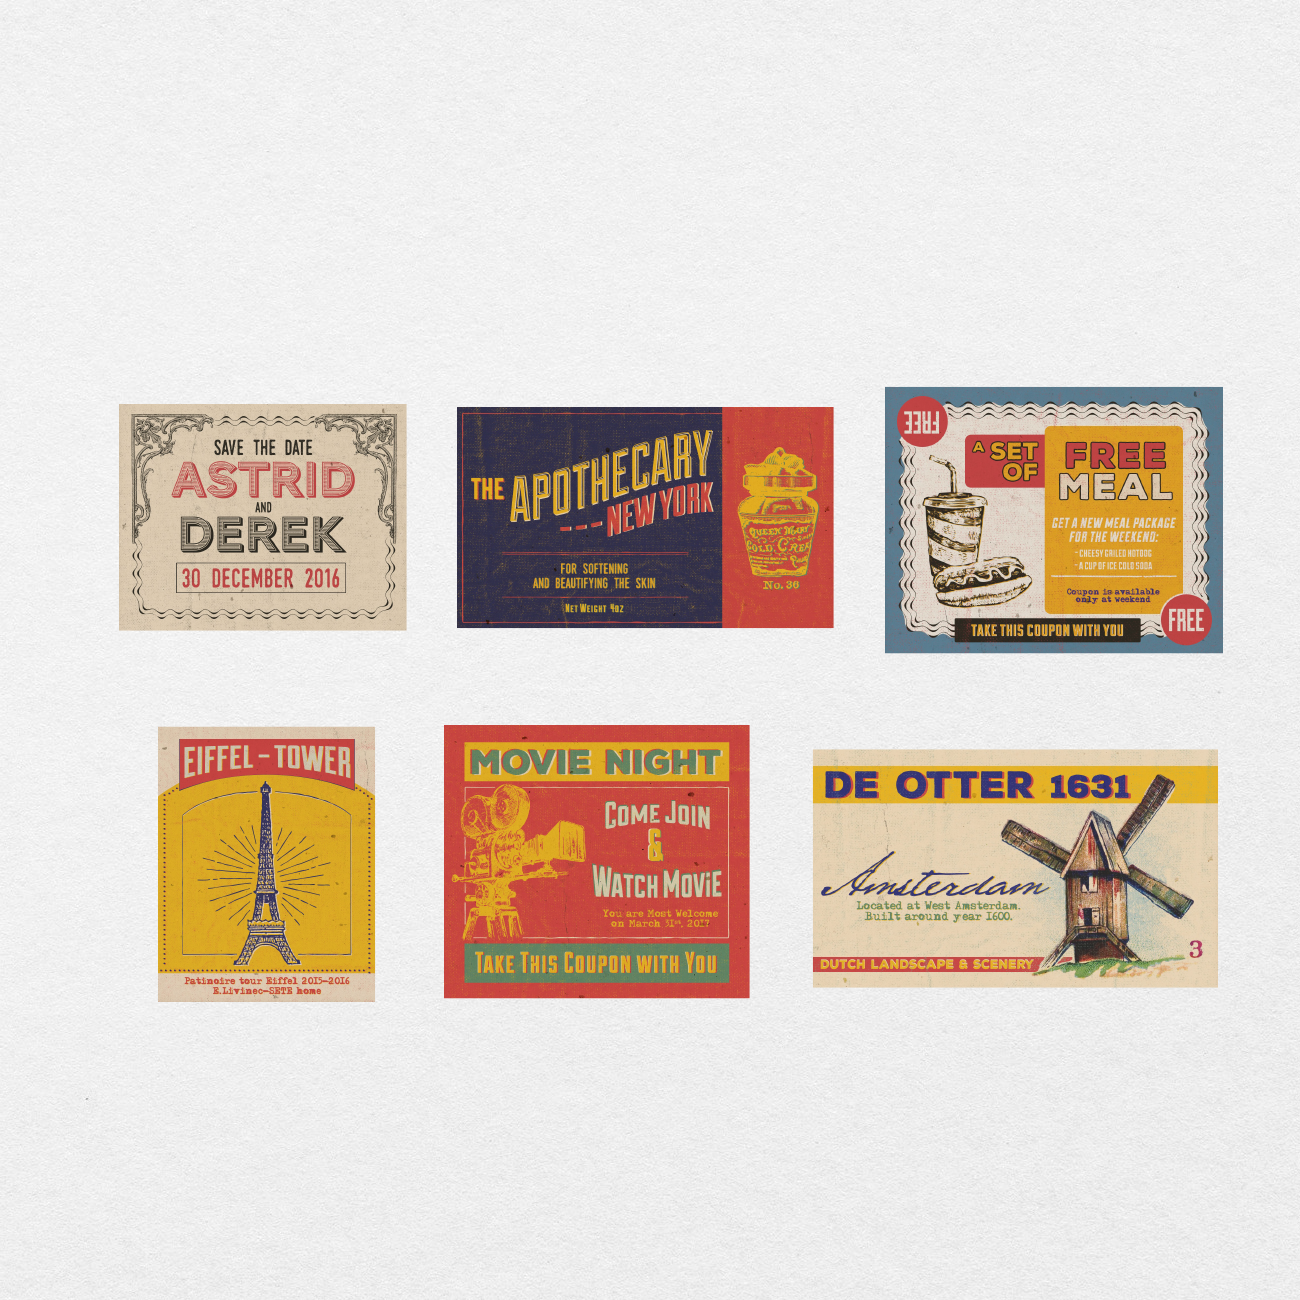 54 Digital Vintage Letters and Numbers Sticker Bundle — Stationery Pal